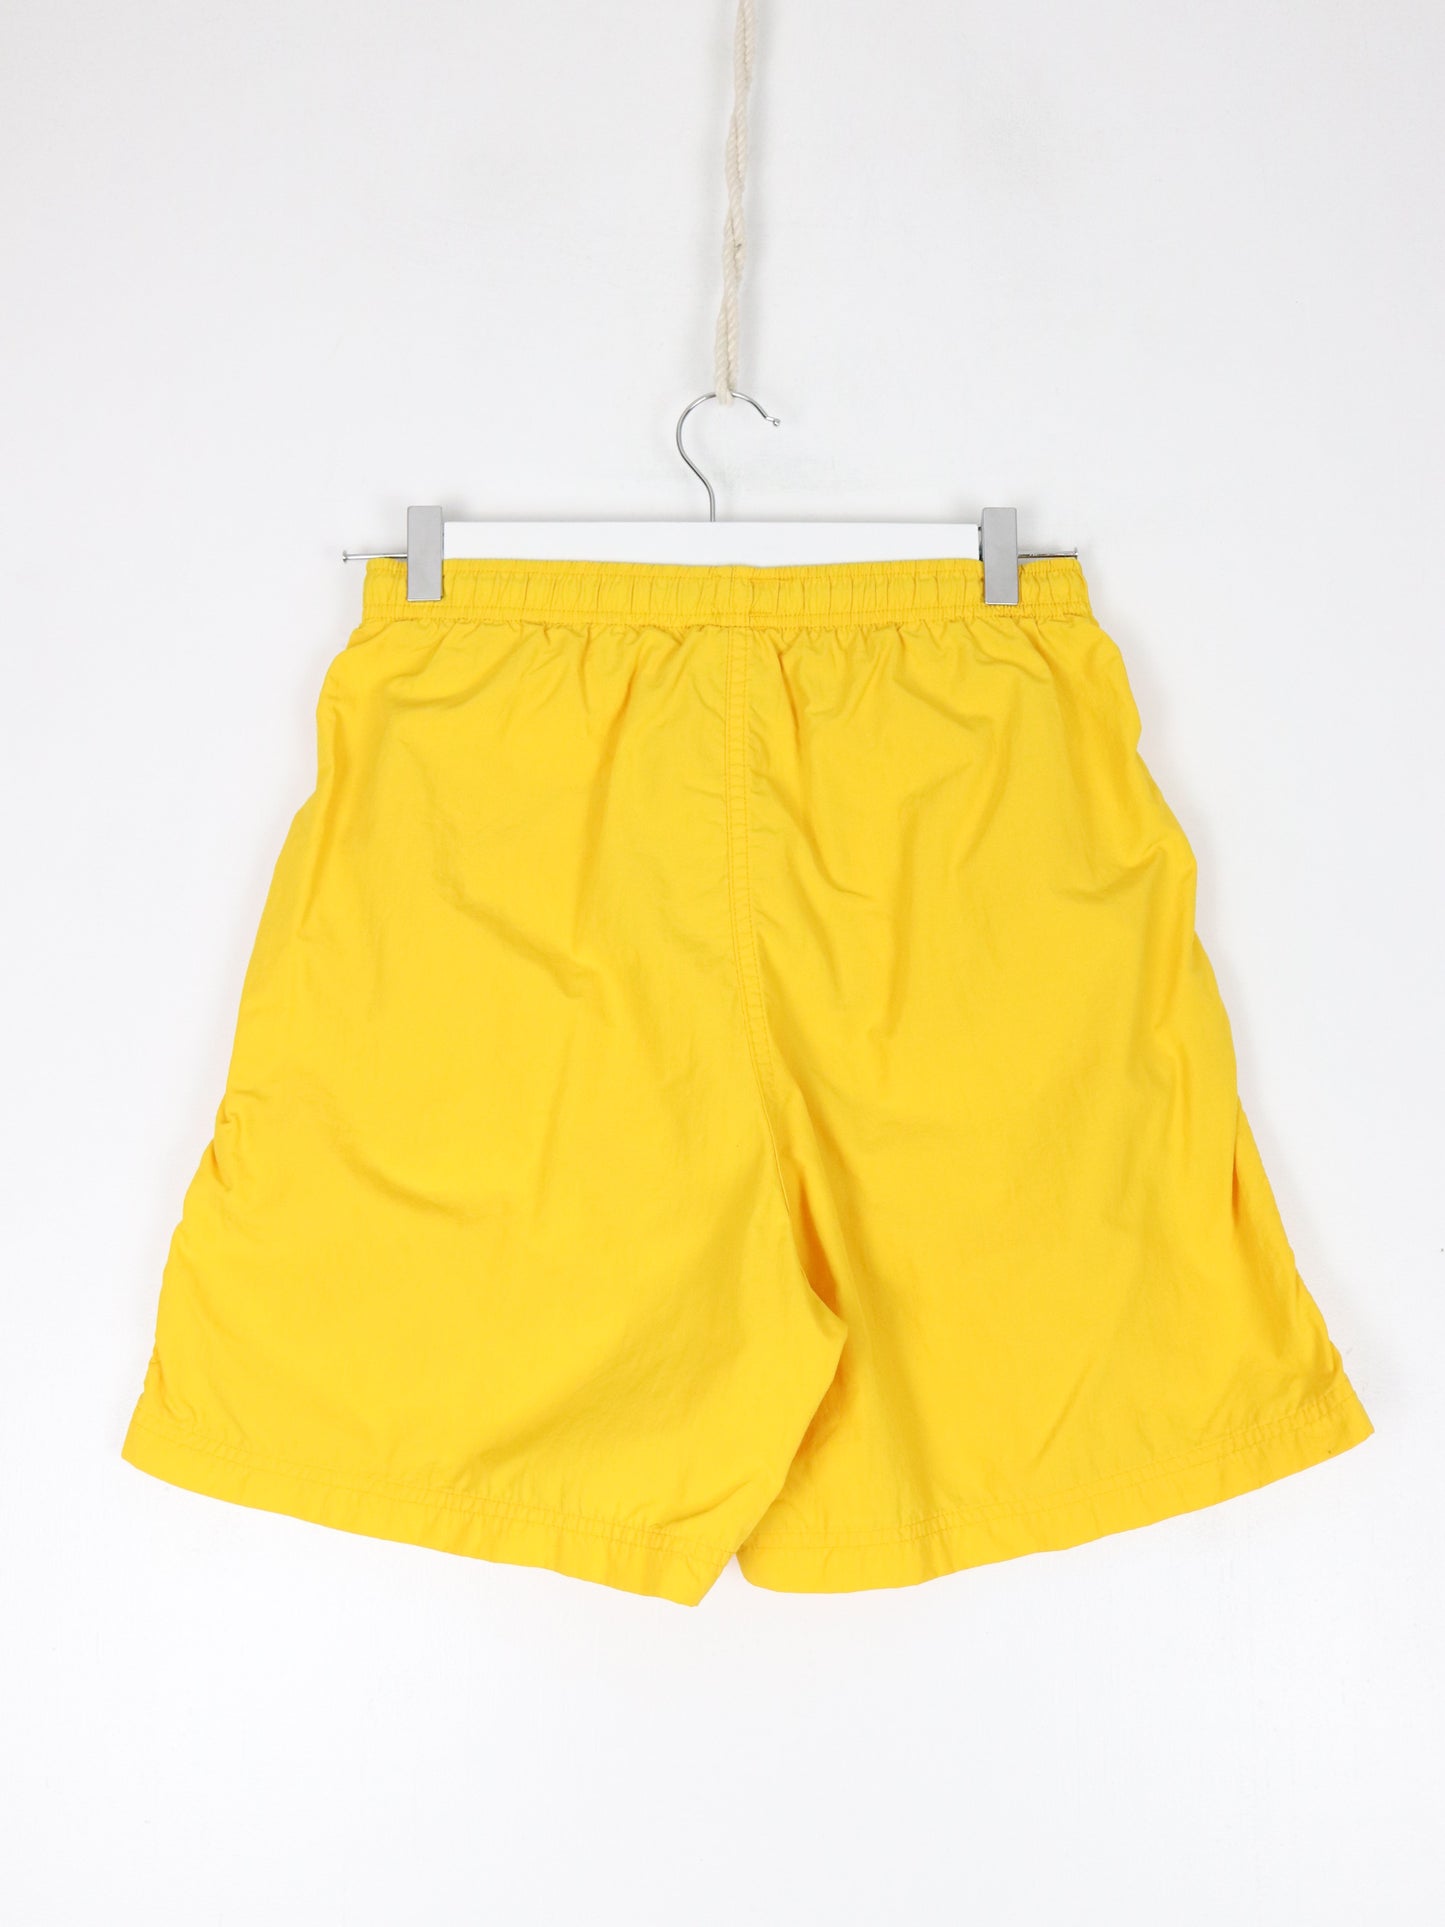 Vintage L.L. Bean Shorts Mens Small Yellow Outdoors